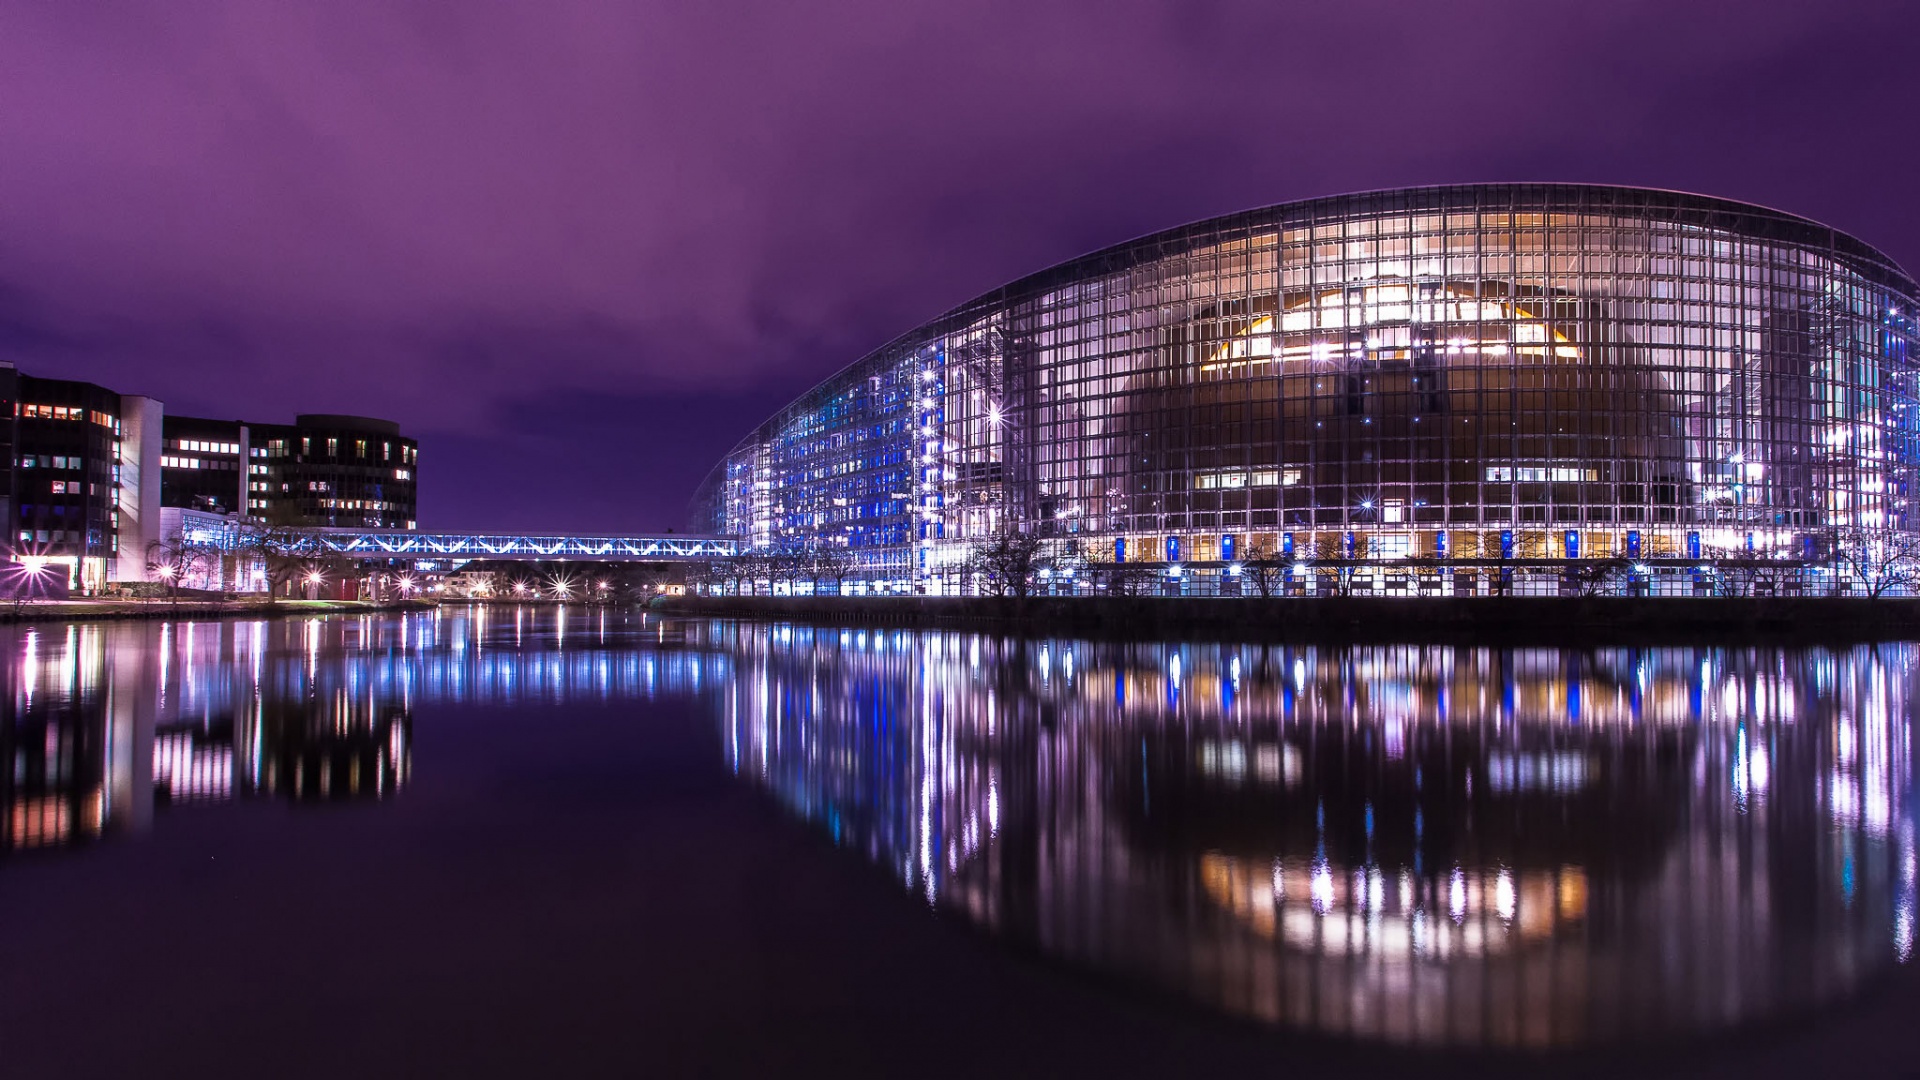 The European Parliament Strasbourg France